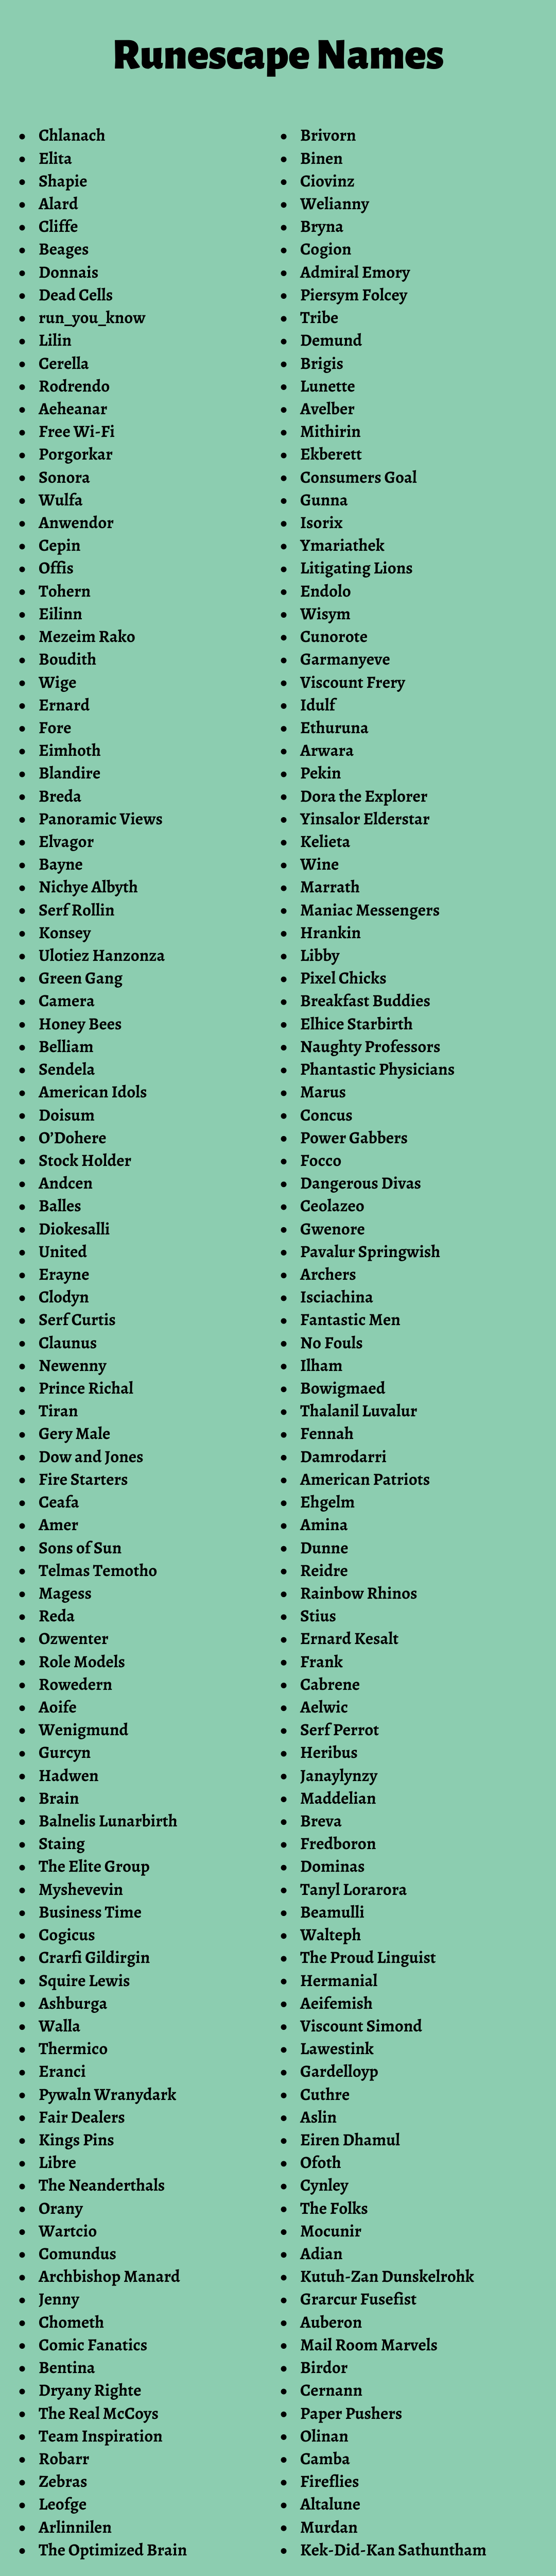 Runescape Names